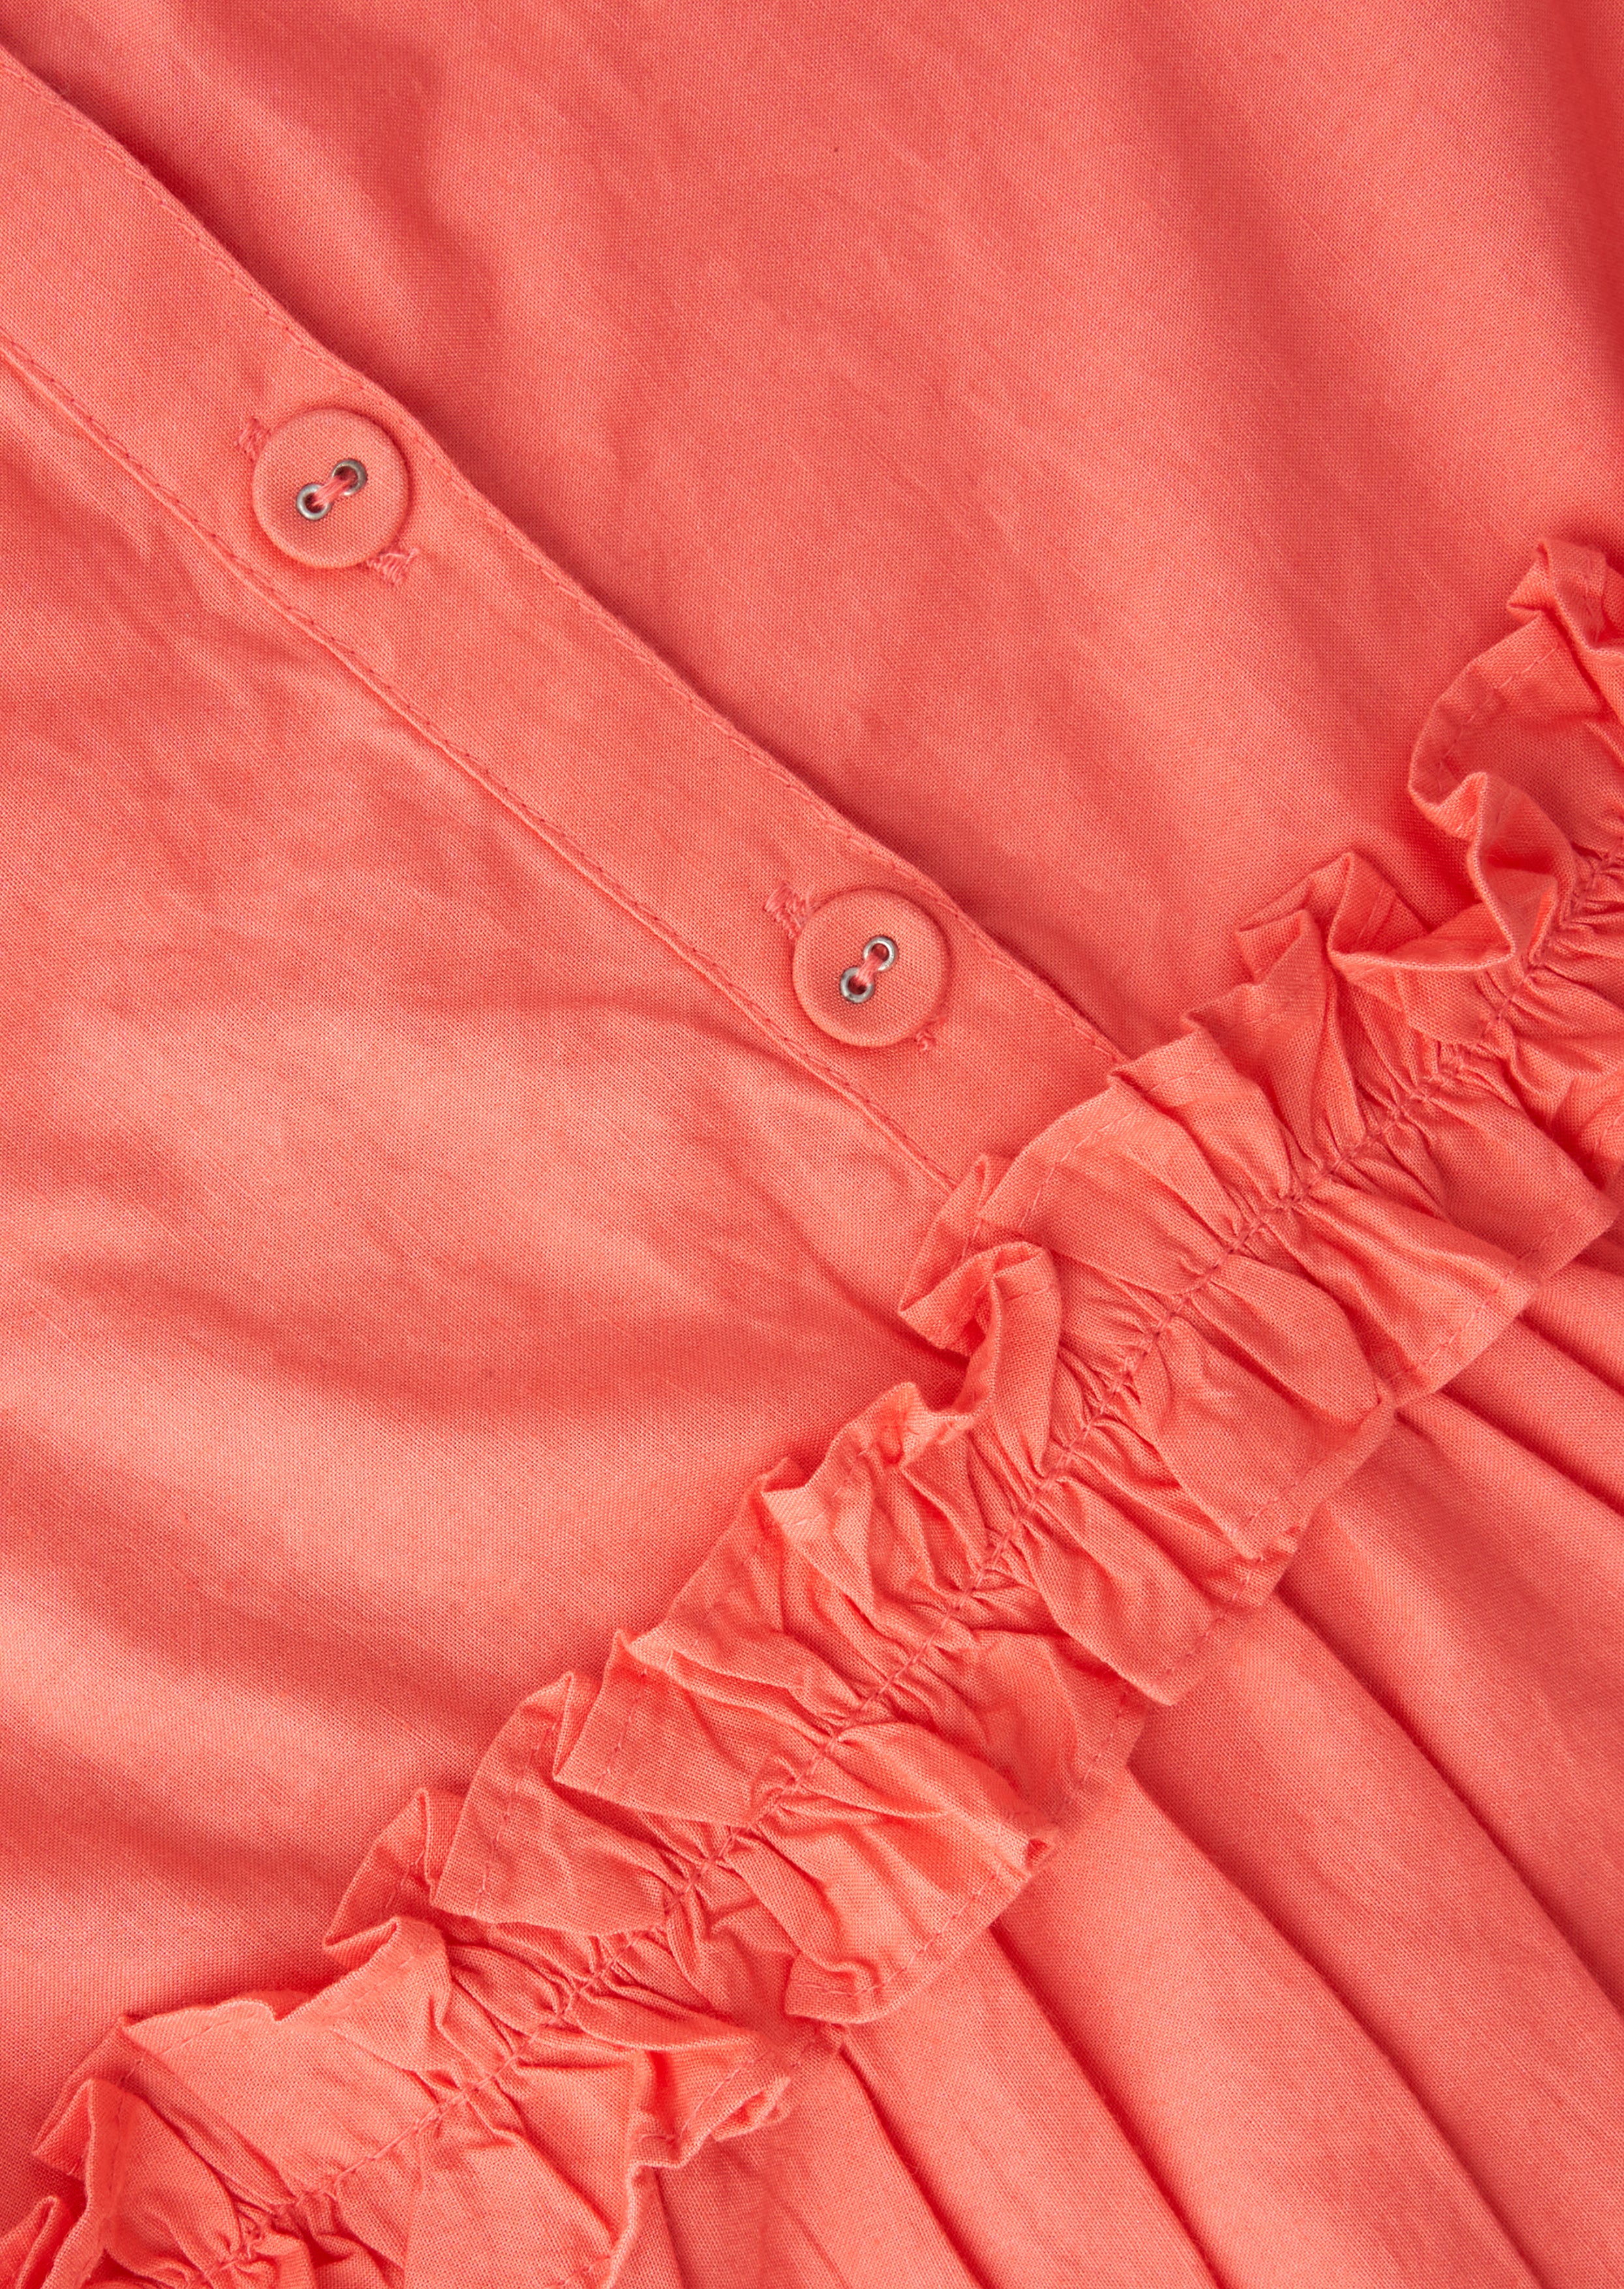 Girls Coral Pink Smocked Cotton Top